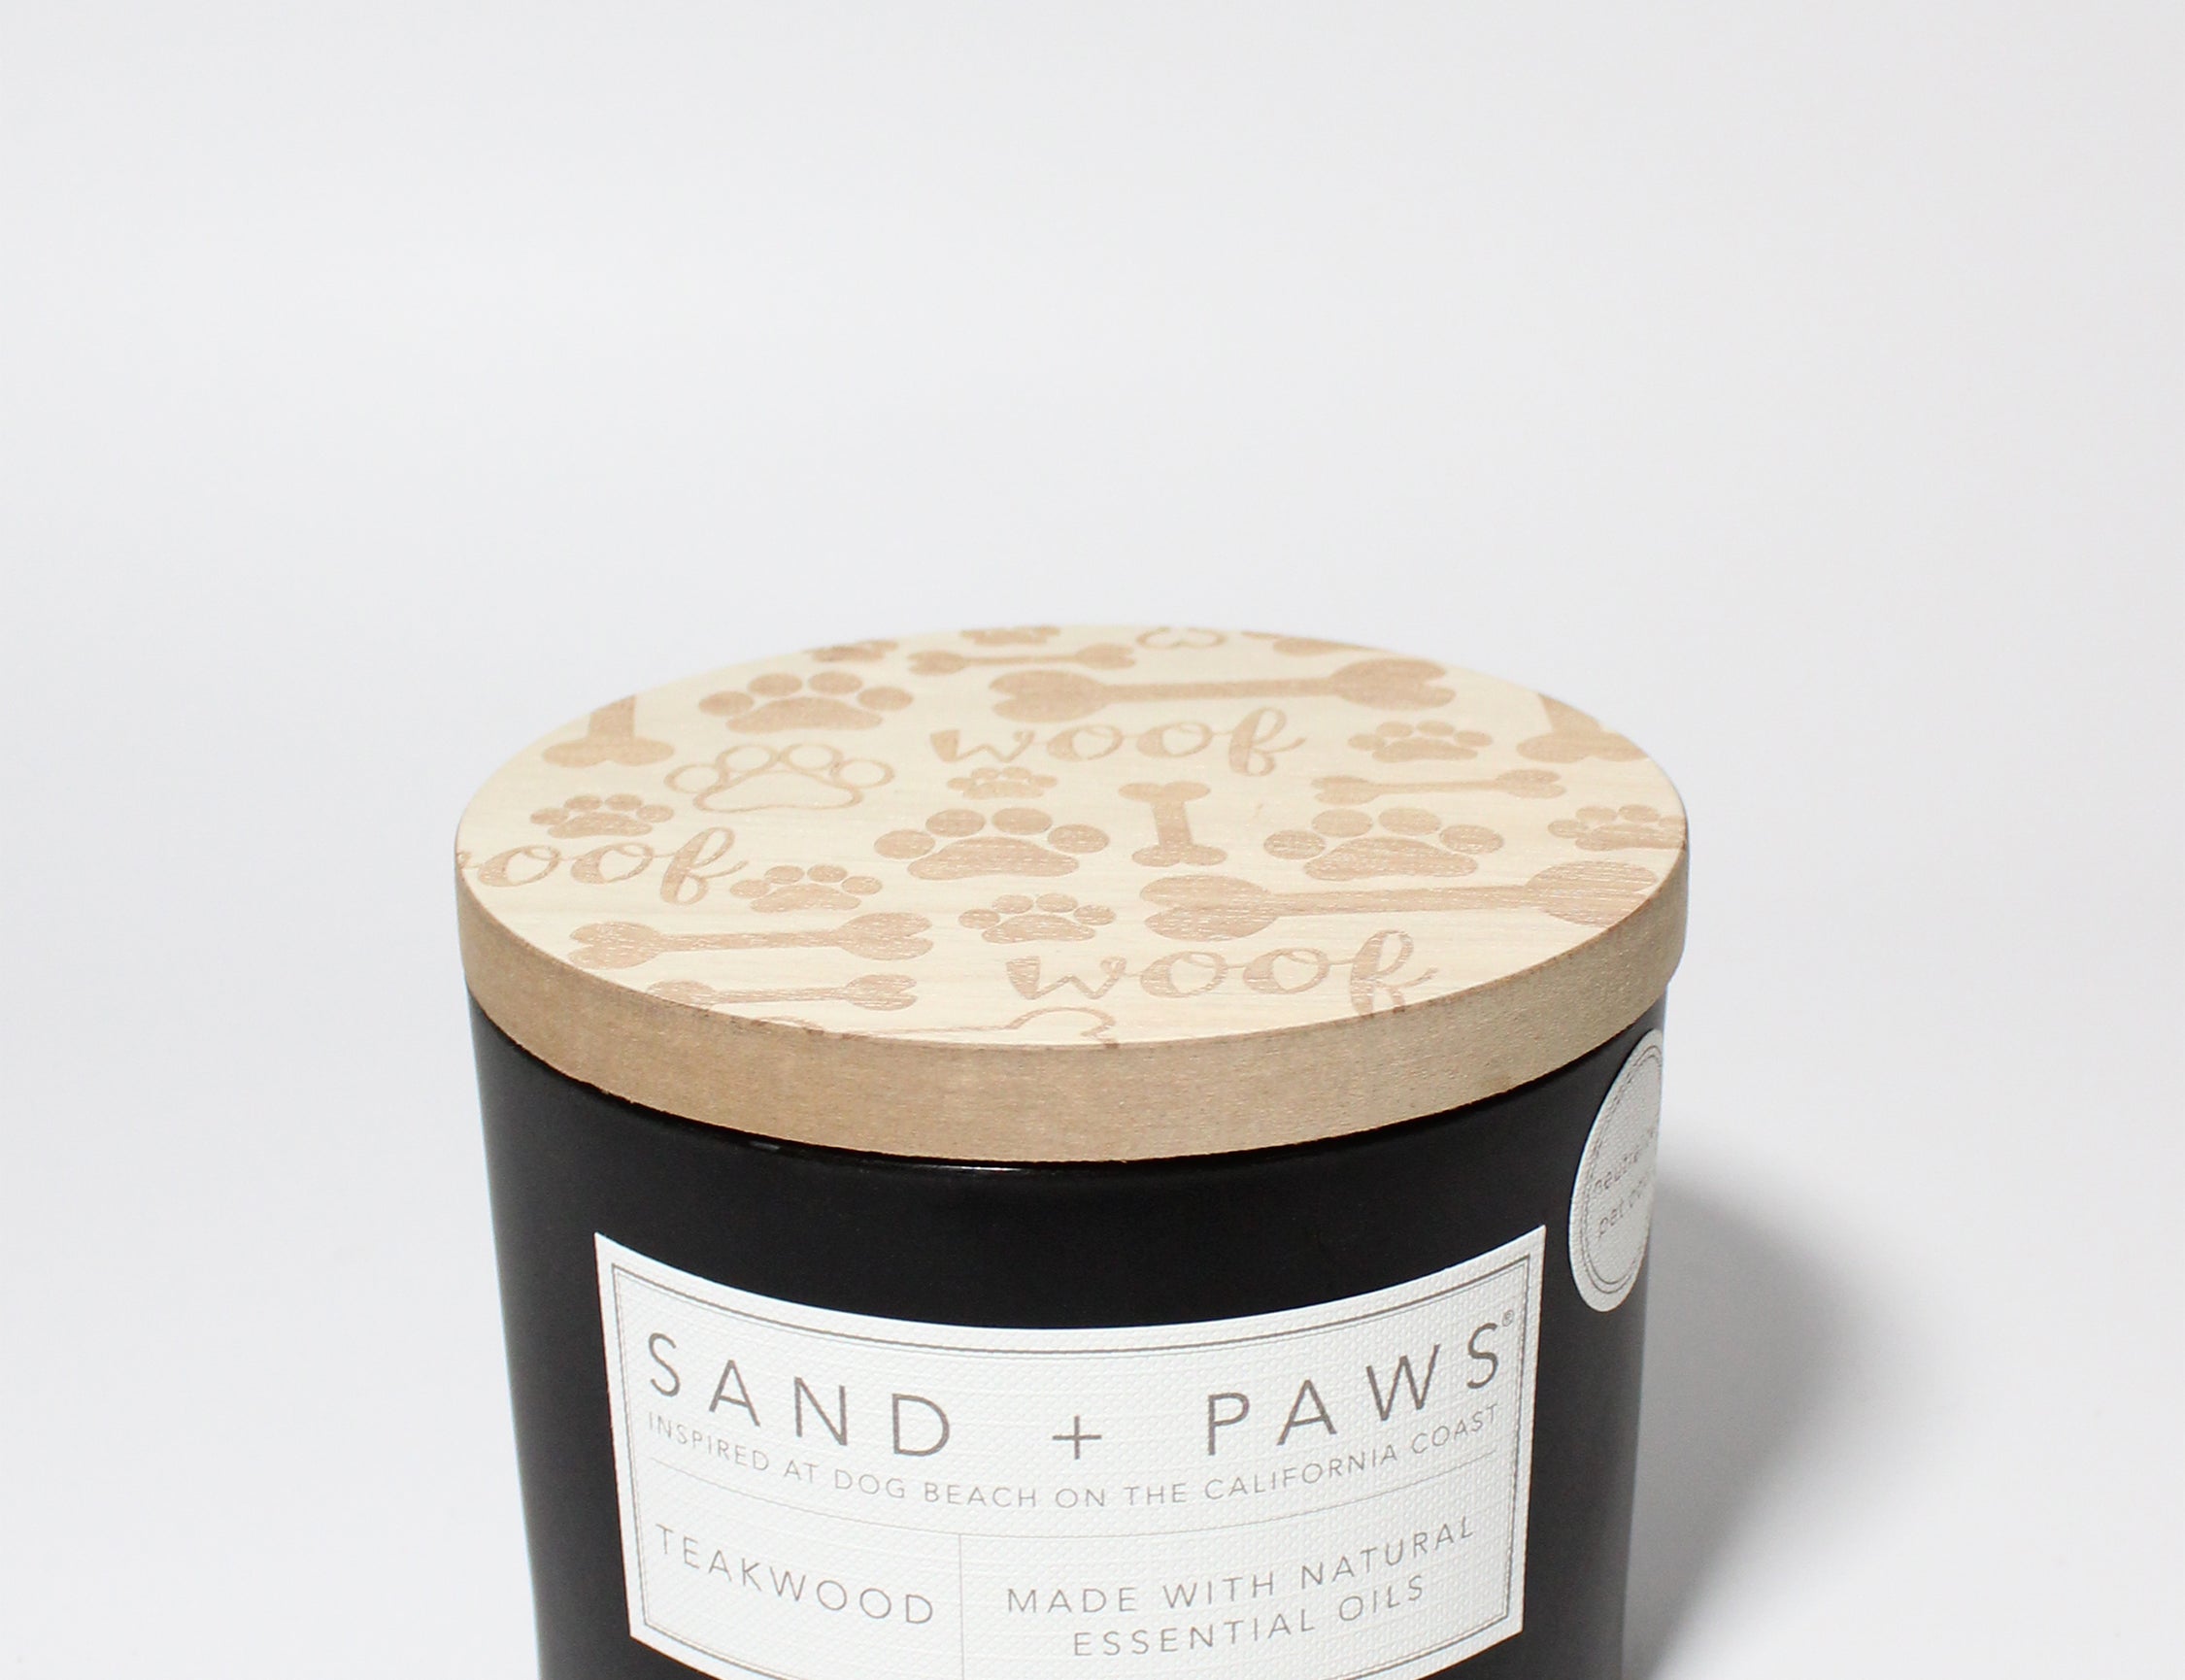 Sand + Paws Teakwood 12 oz scented candle Black vessel with Carved Bones & Woof lid